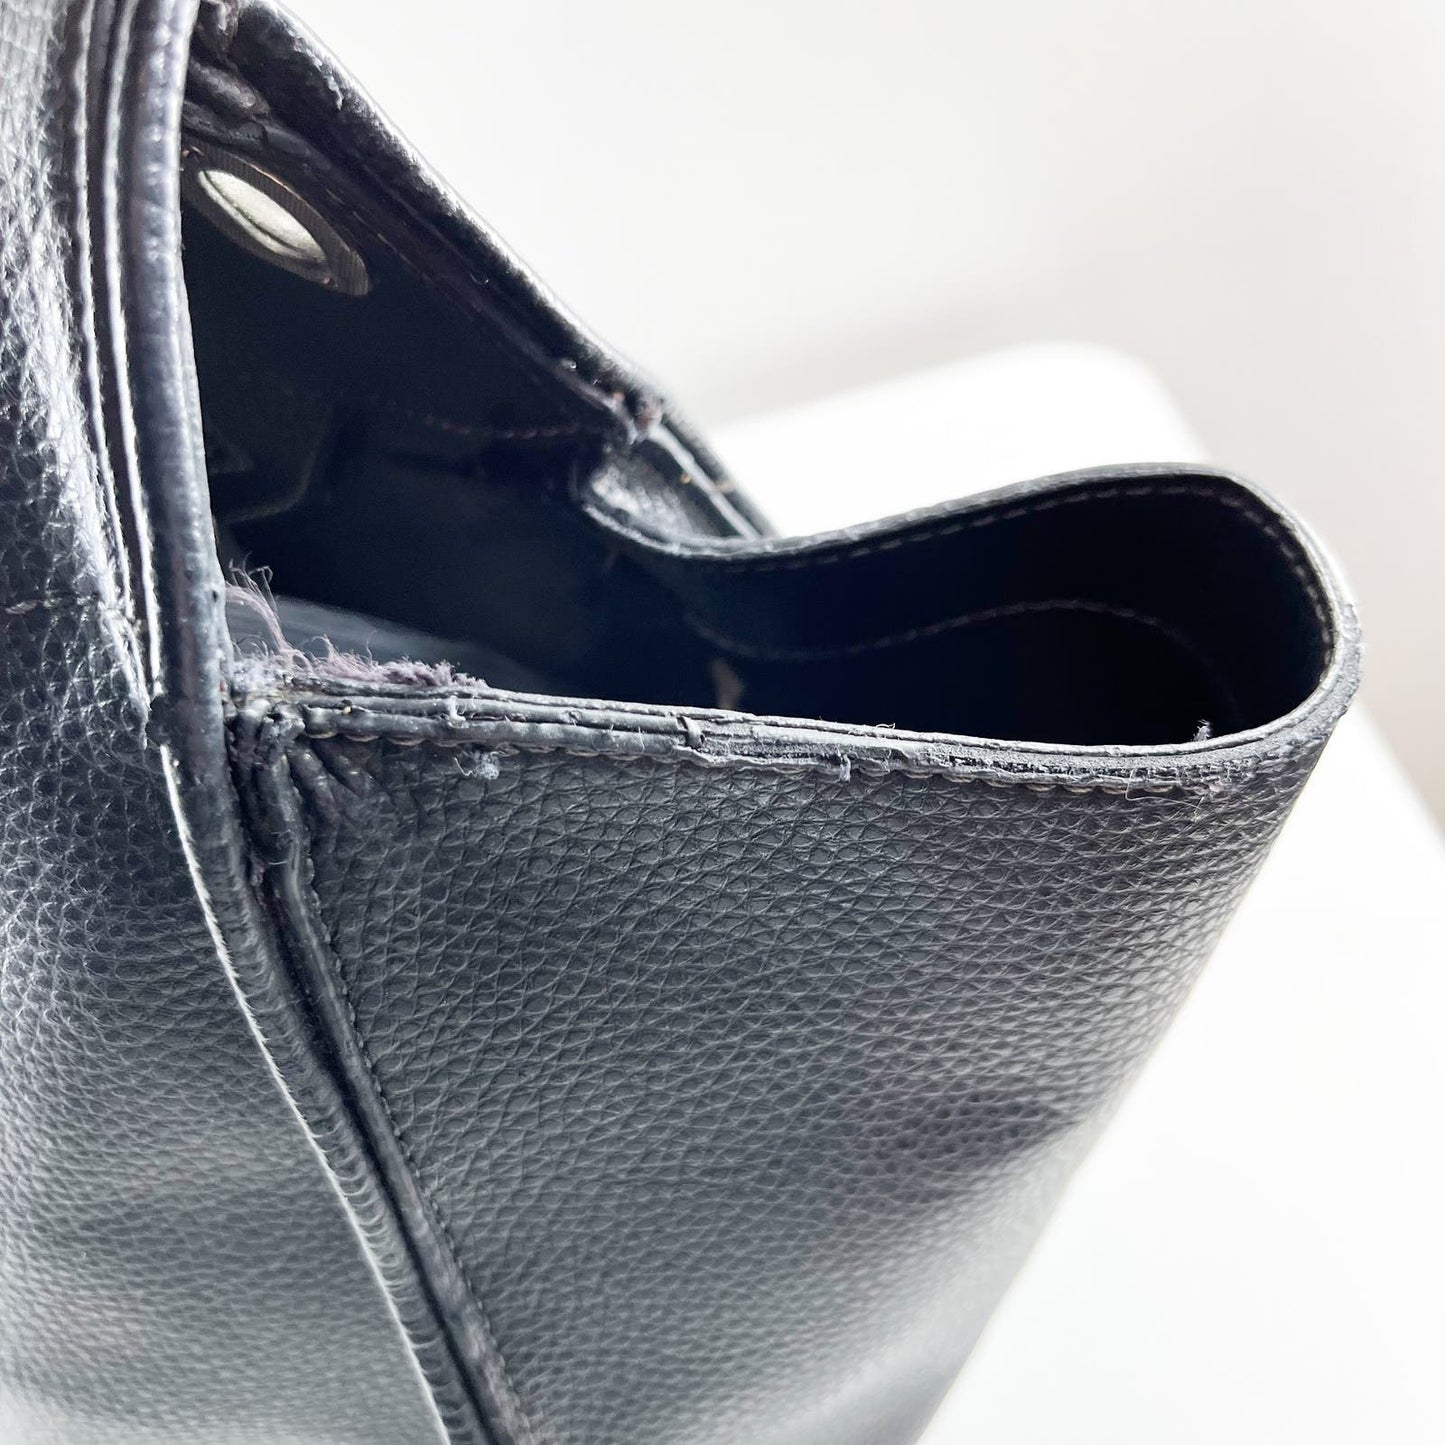 Tod's Leather Top Handle Satchel Handbag Purse Black